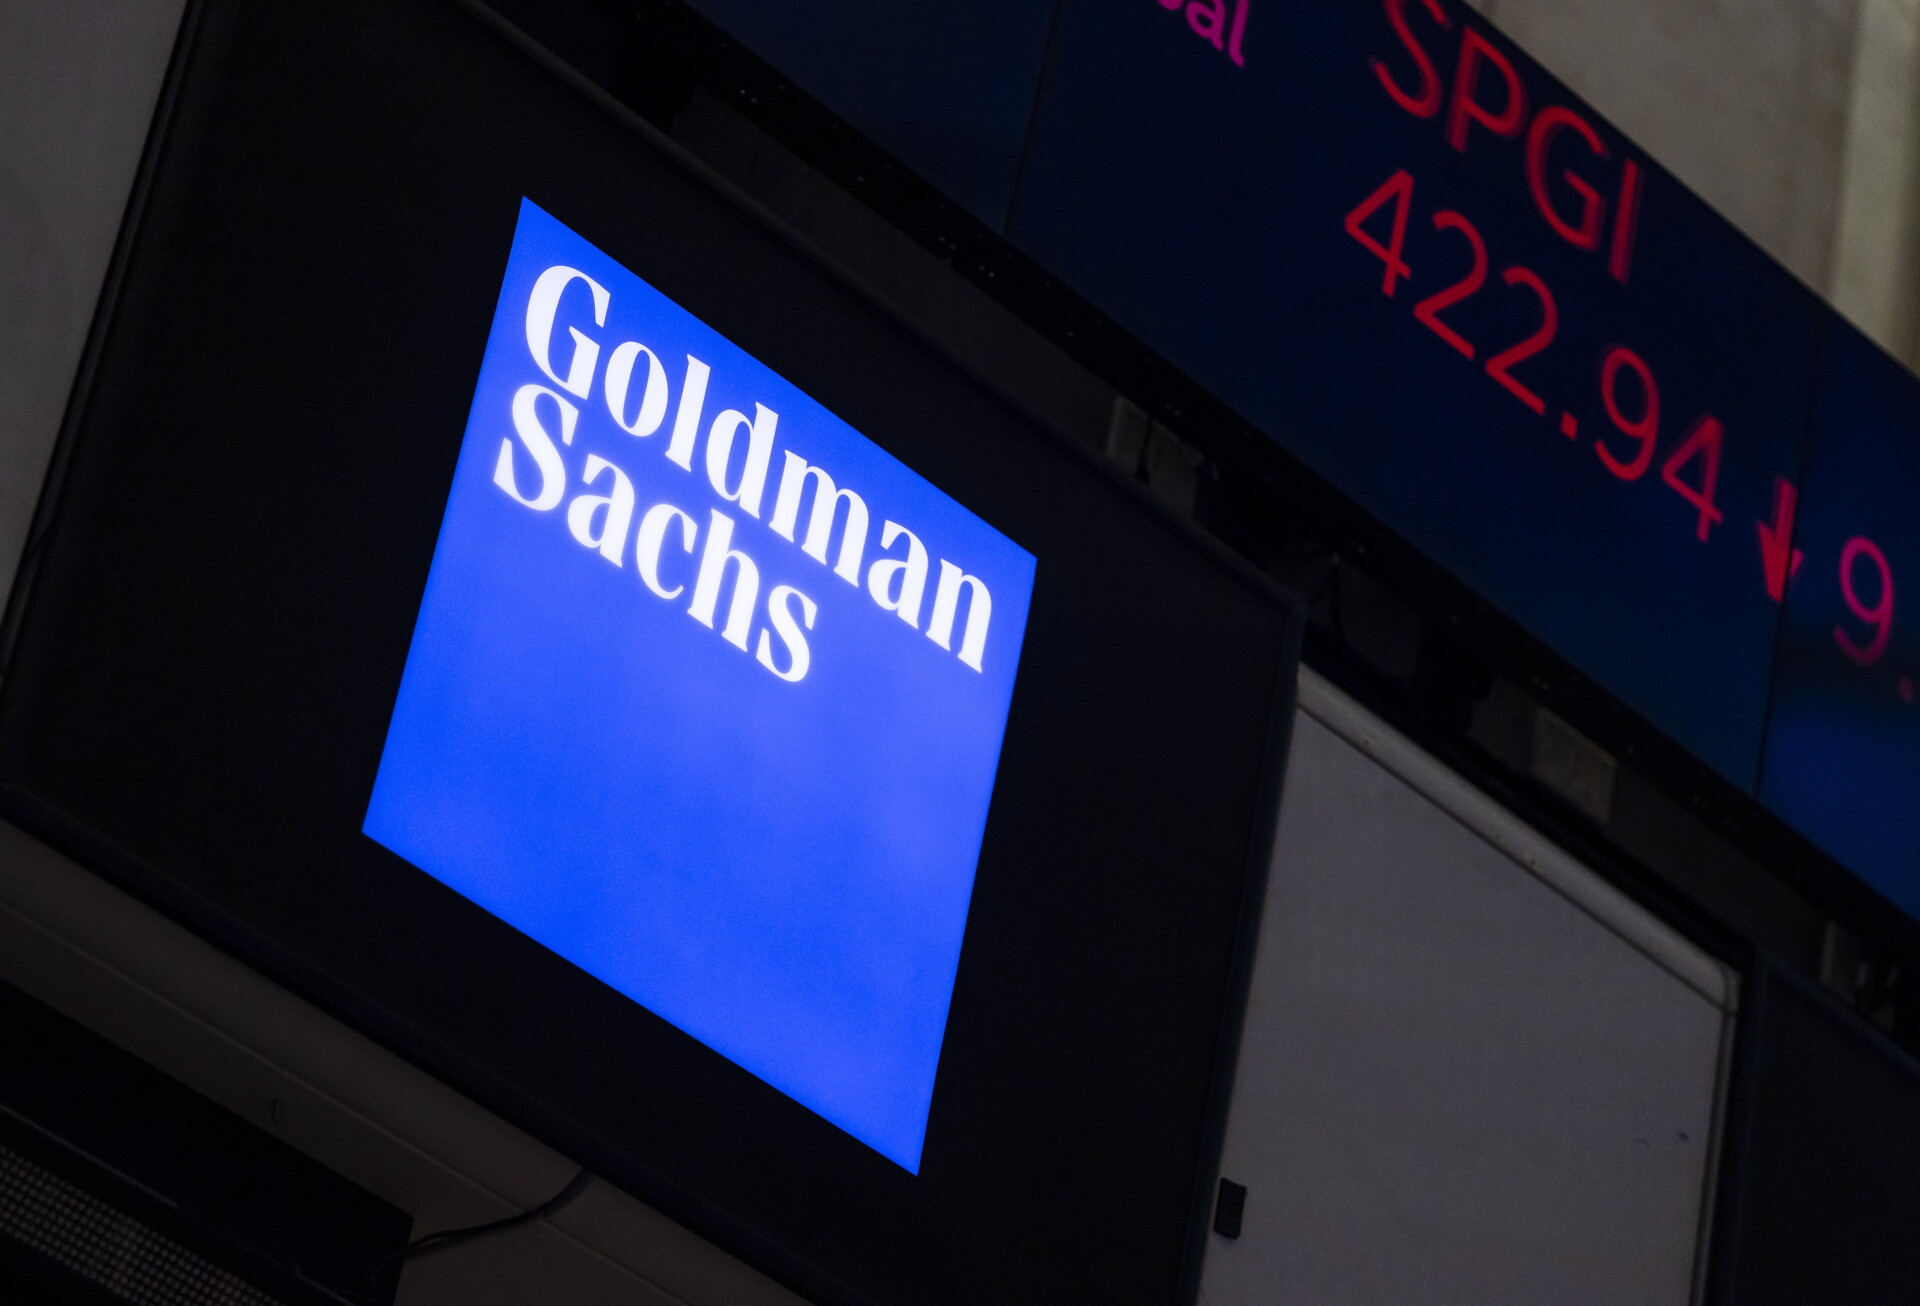 Goldman Sachs © EPA/JUSTIN LANE